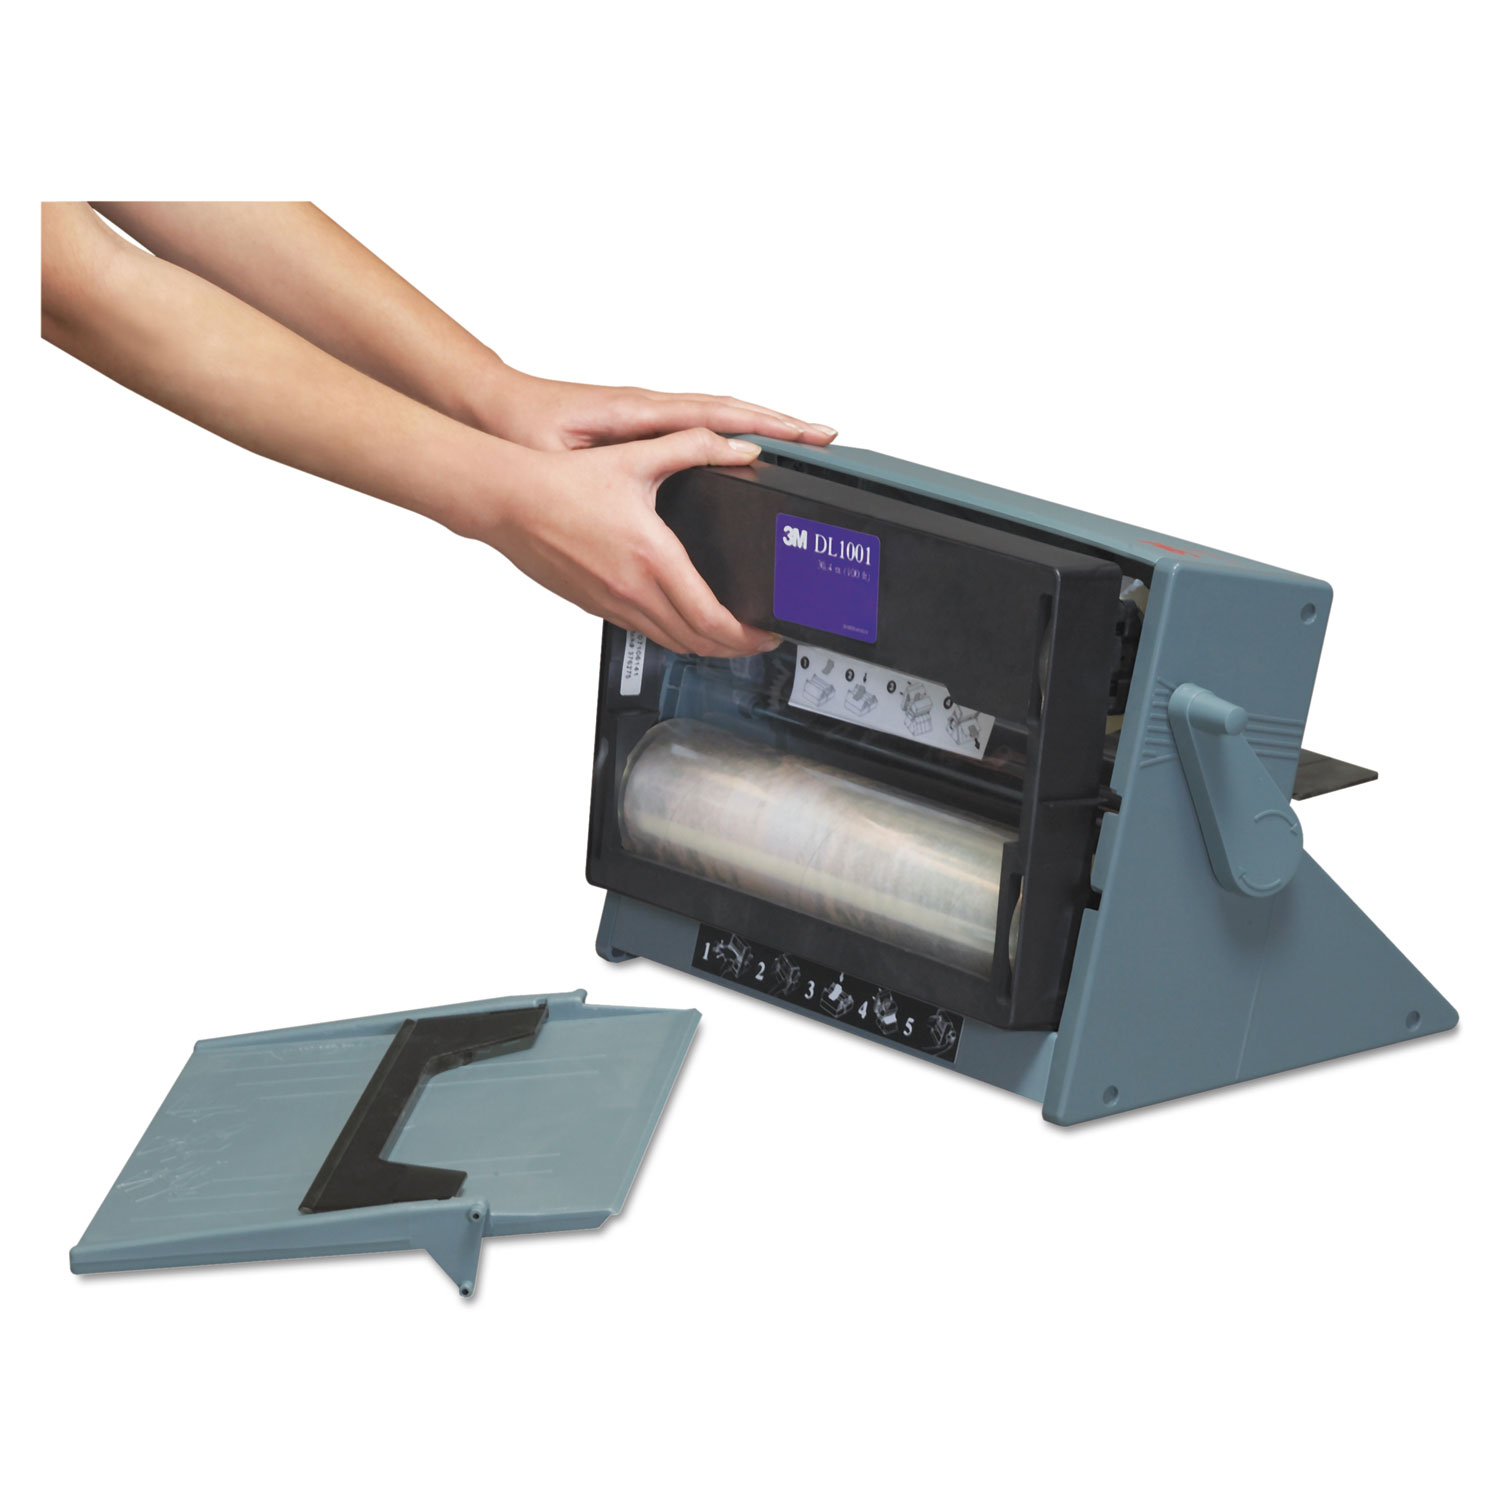 Heat-Free Laminator with 1 Cartridge, 12 Maximum Document Size